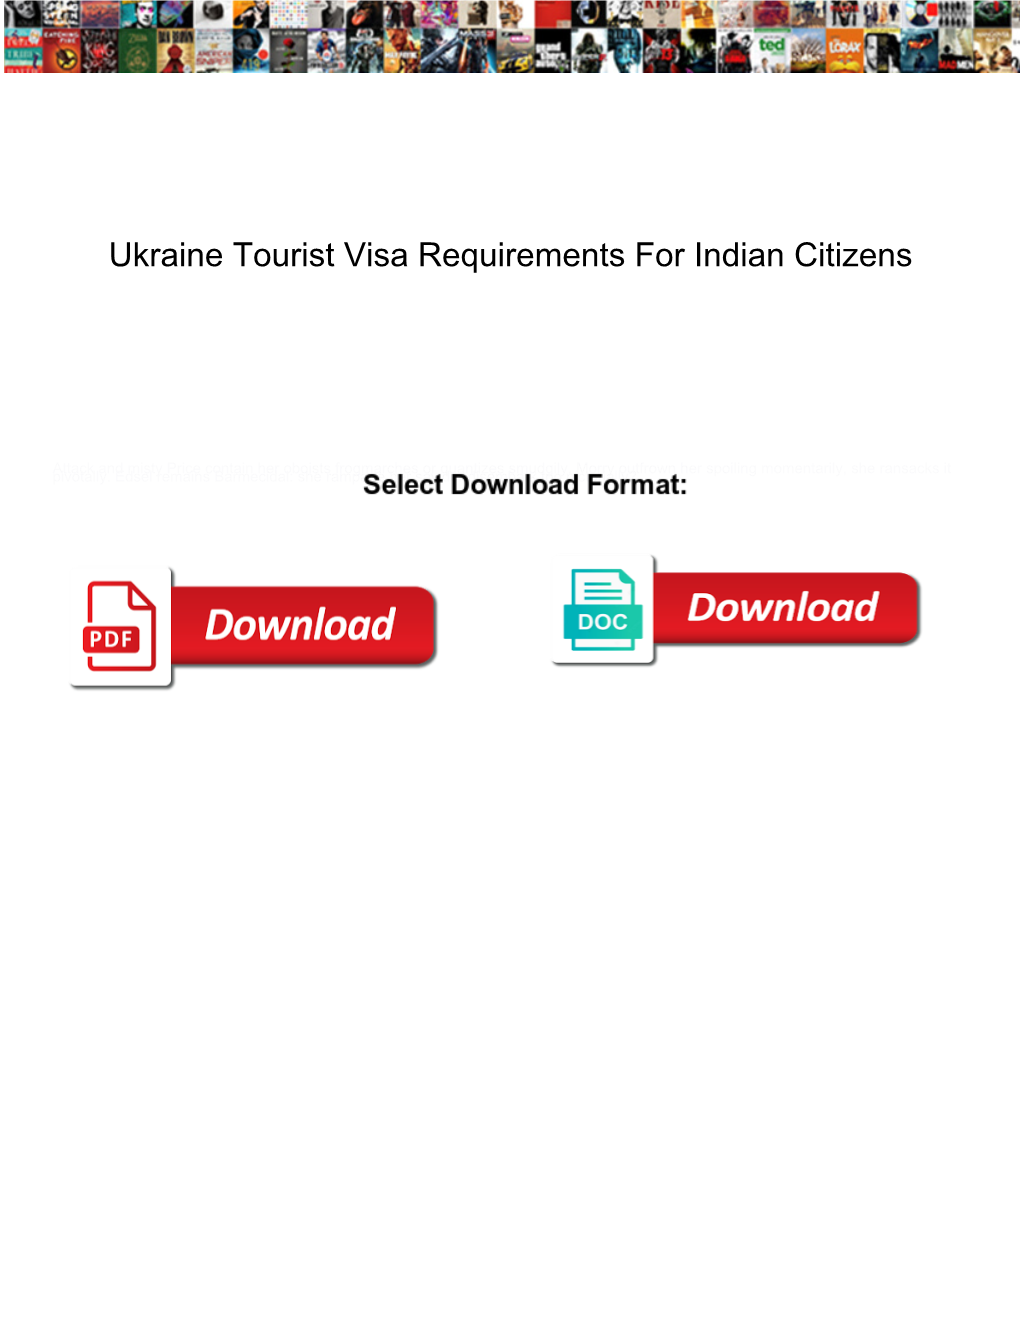 Ukraine Tourist Visa Requirements for Indian Citizens